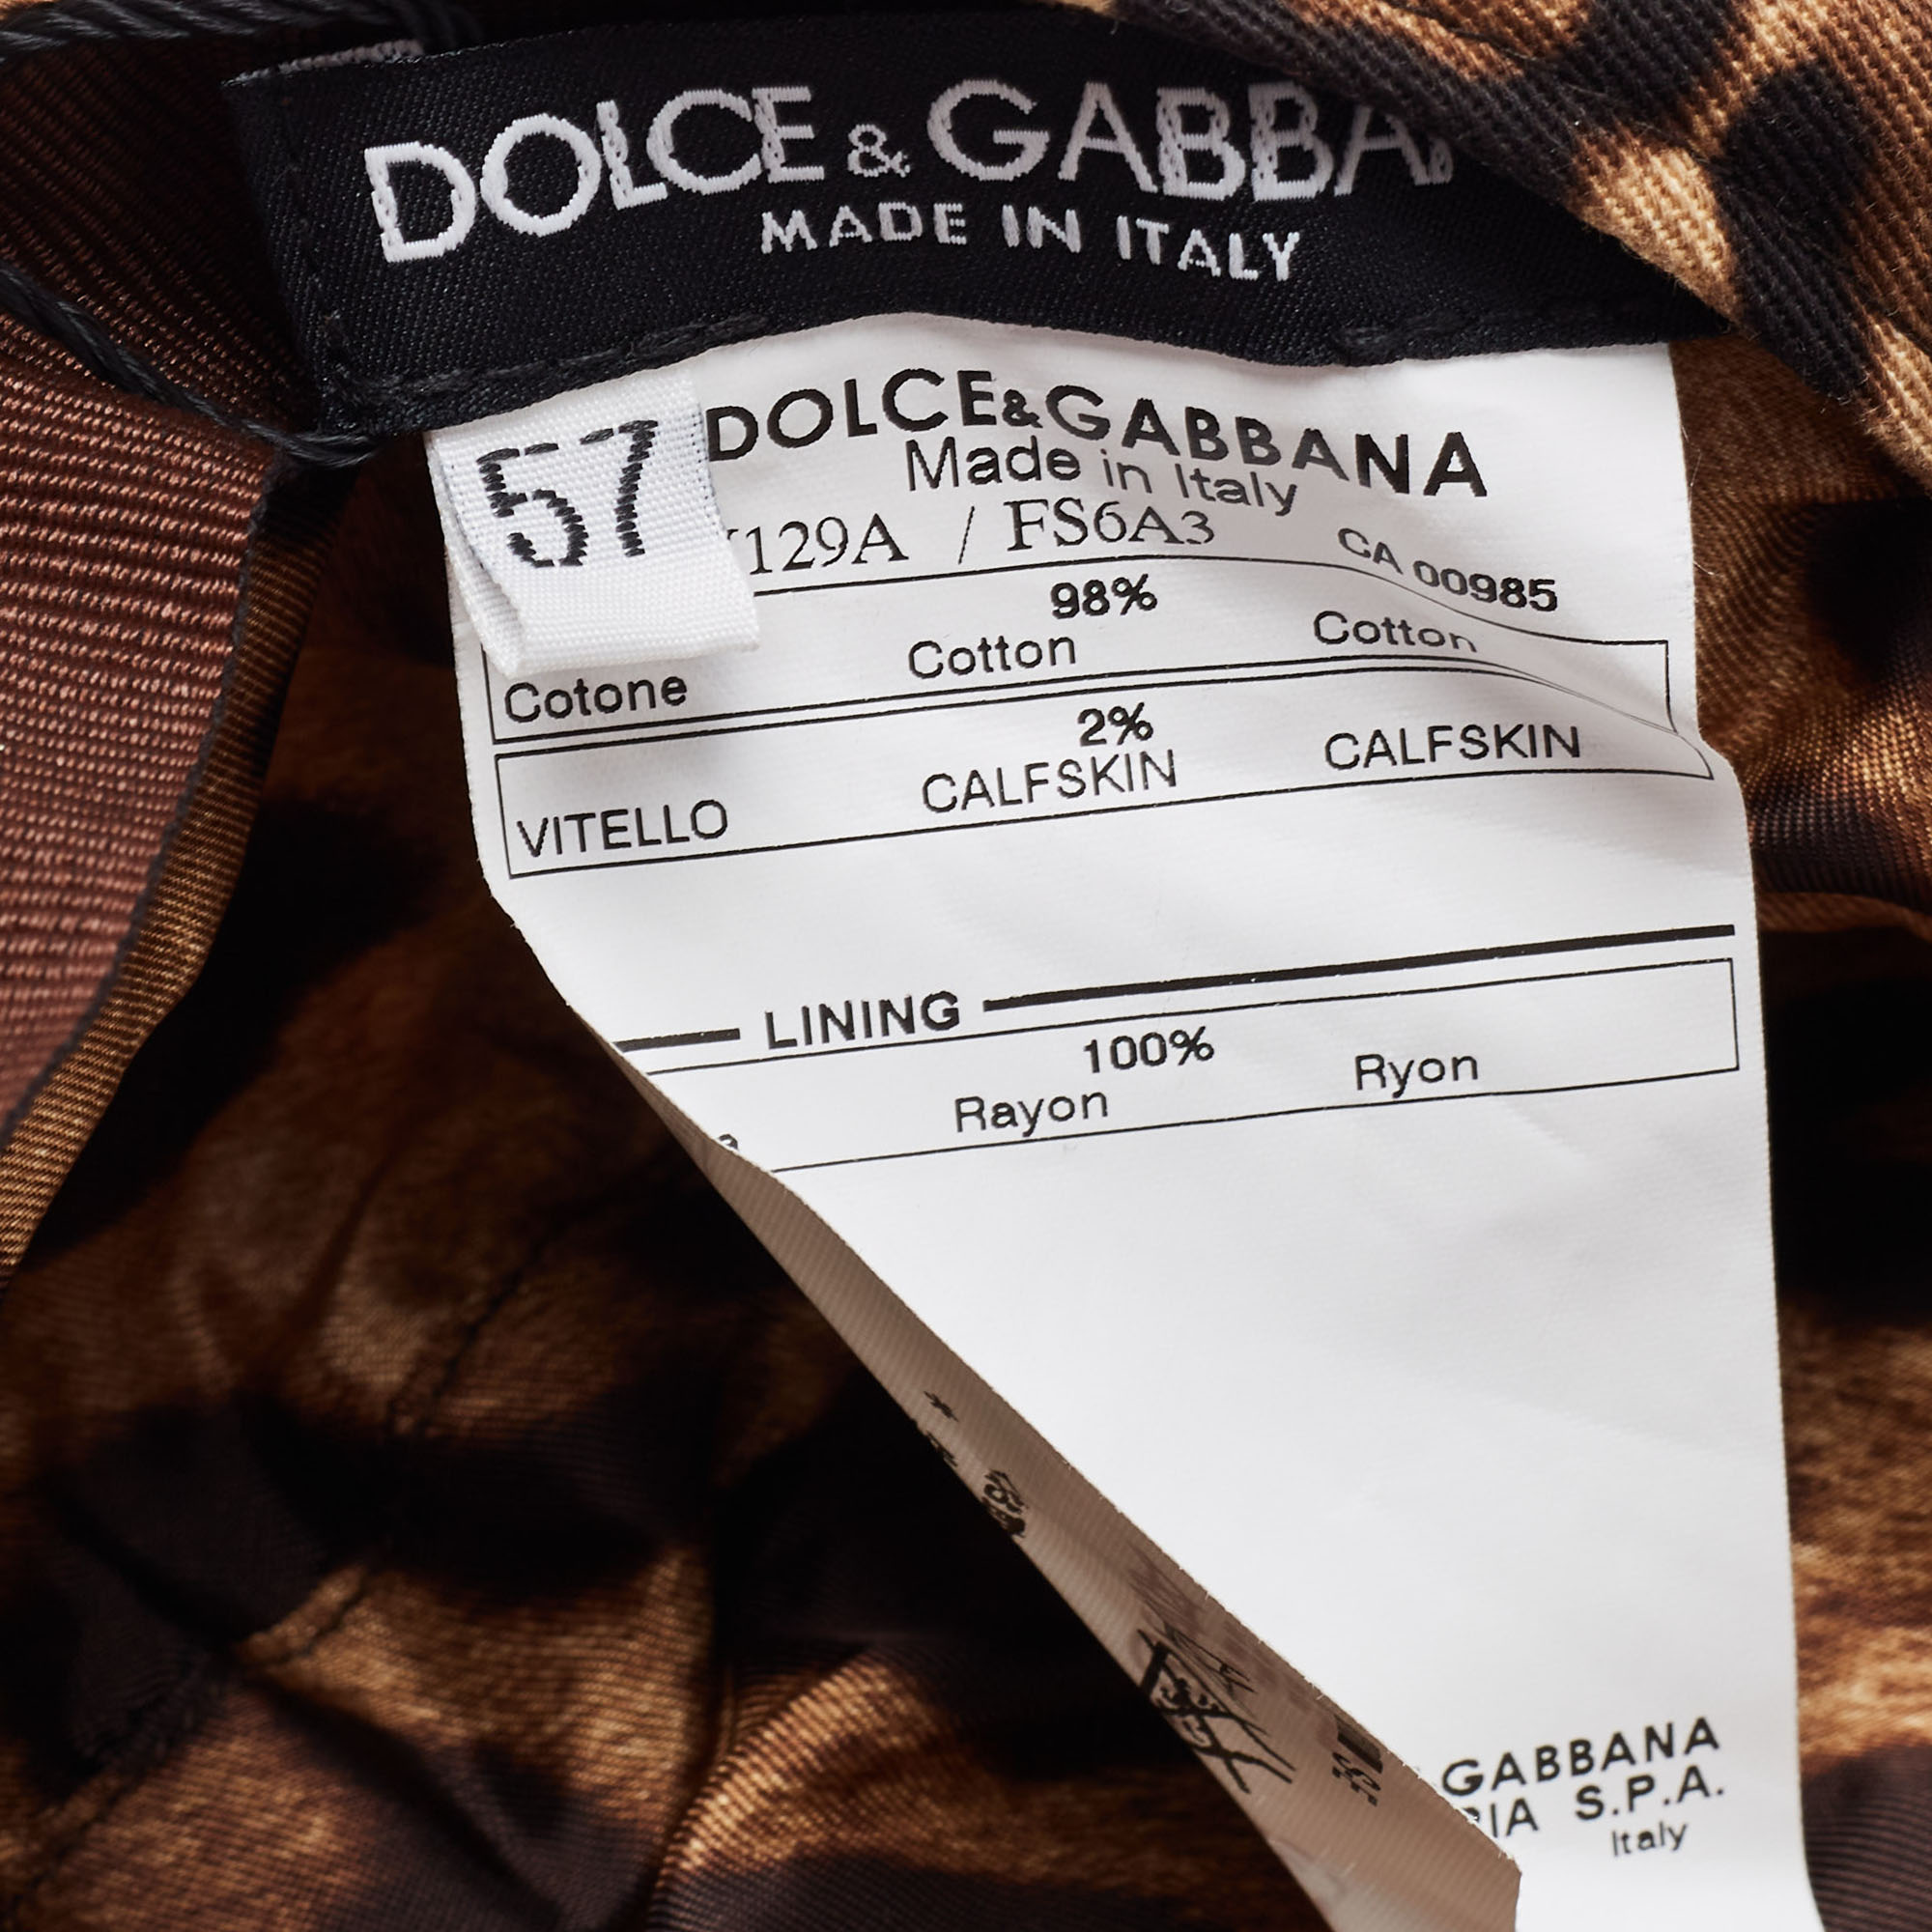 Dolce & Gabbana Brown Leopard Print Cotton Logo Patch Cap Size 57